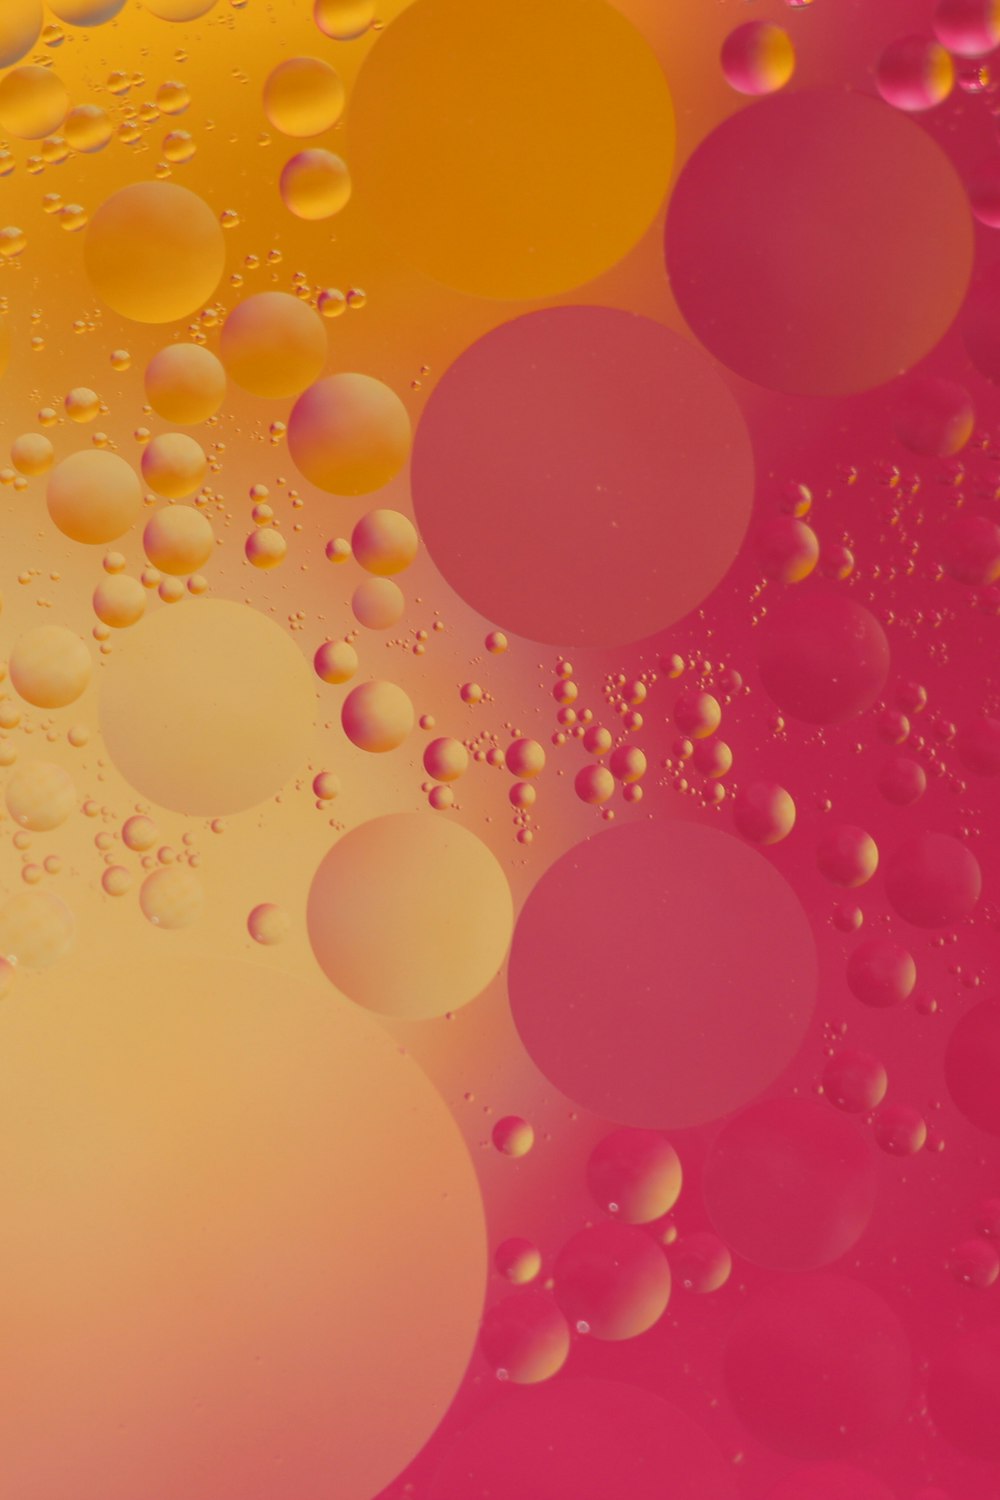 pink and orange bubble digital wallpaper photo – Free Texture Image on  Unsplash